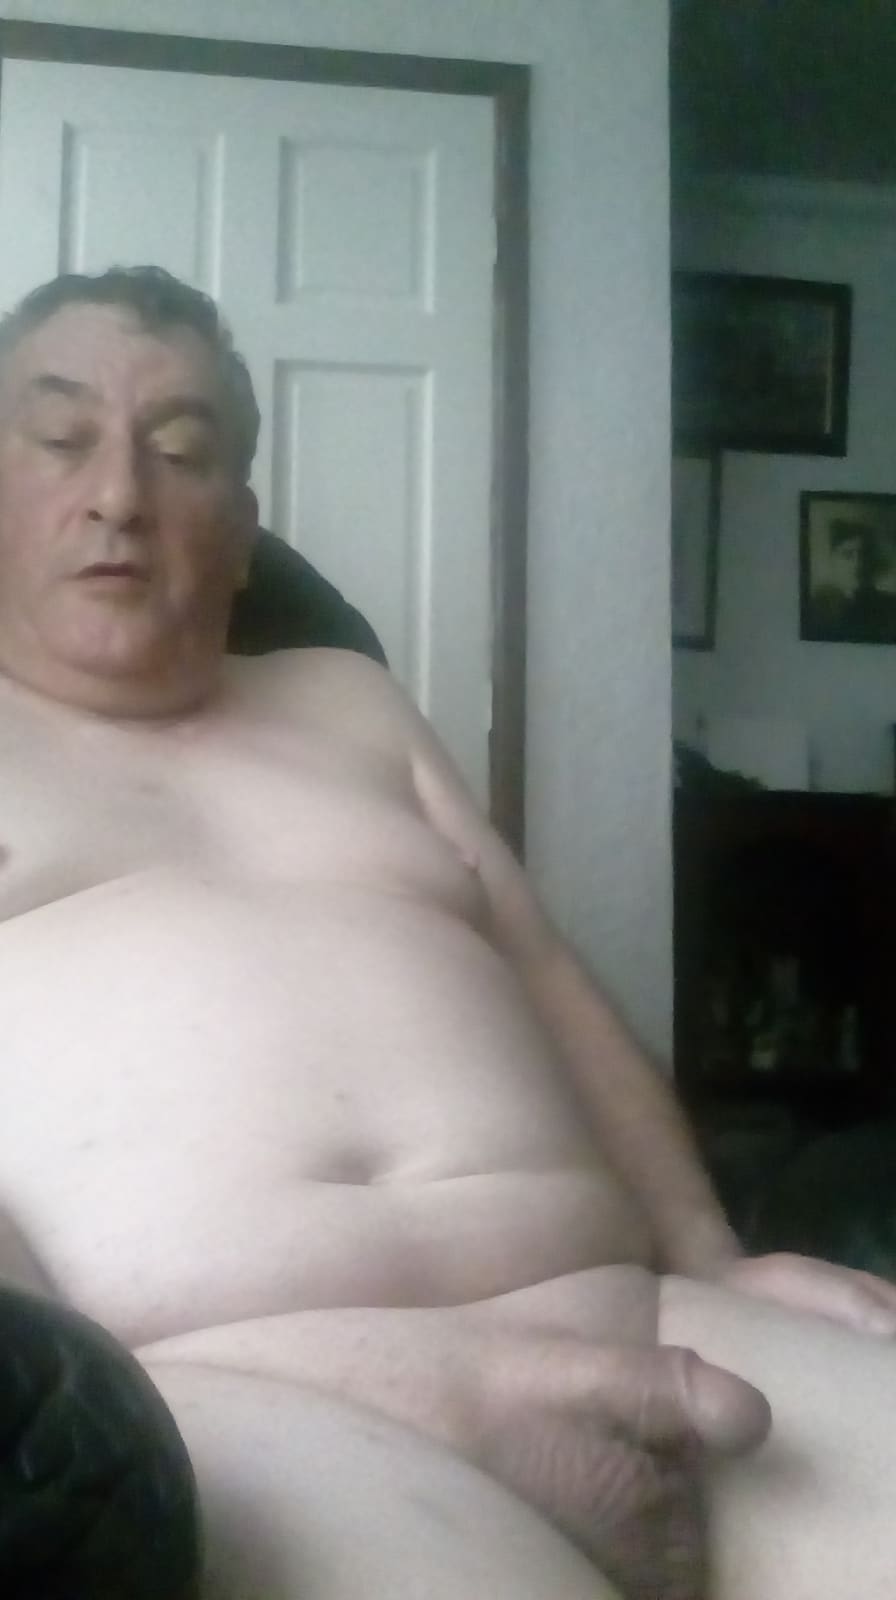 Real Amateurs Dick Flash Pics - Peter nude older man flashing small cock secretly